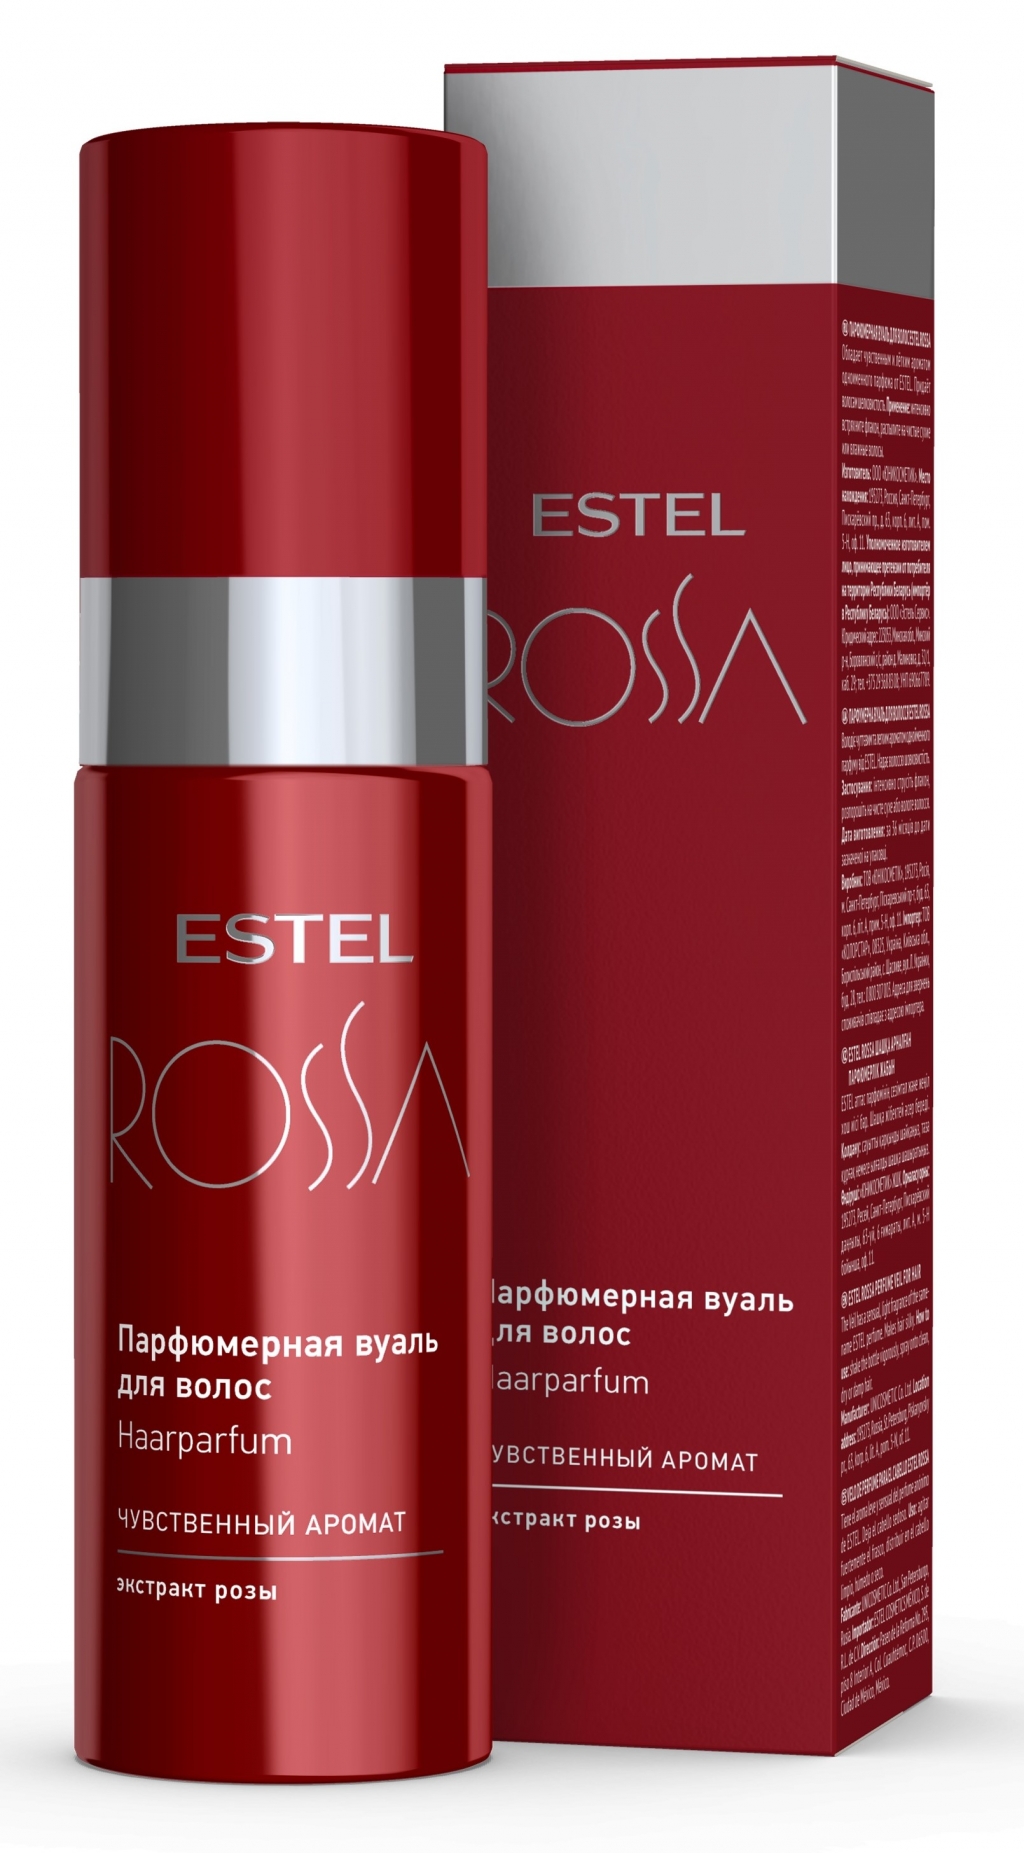 Estel Professional Парфюмерная вуаль для волос, 100 мл (Estel Professional, Rossa) от Socolor